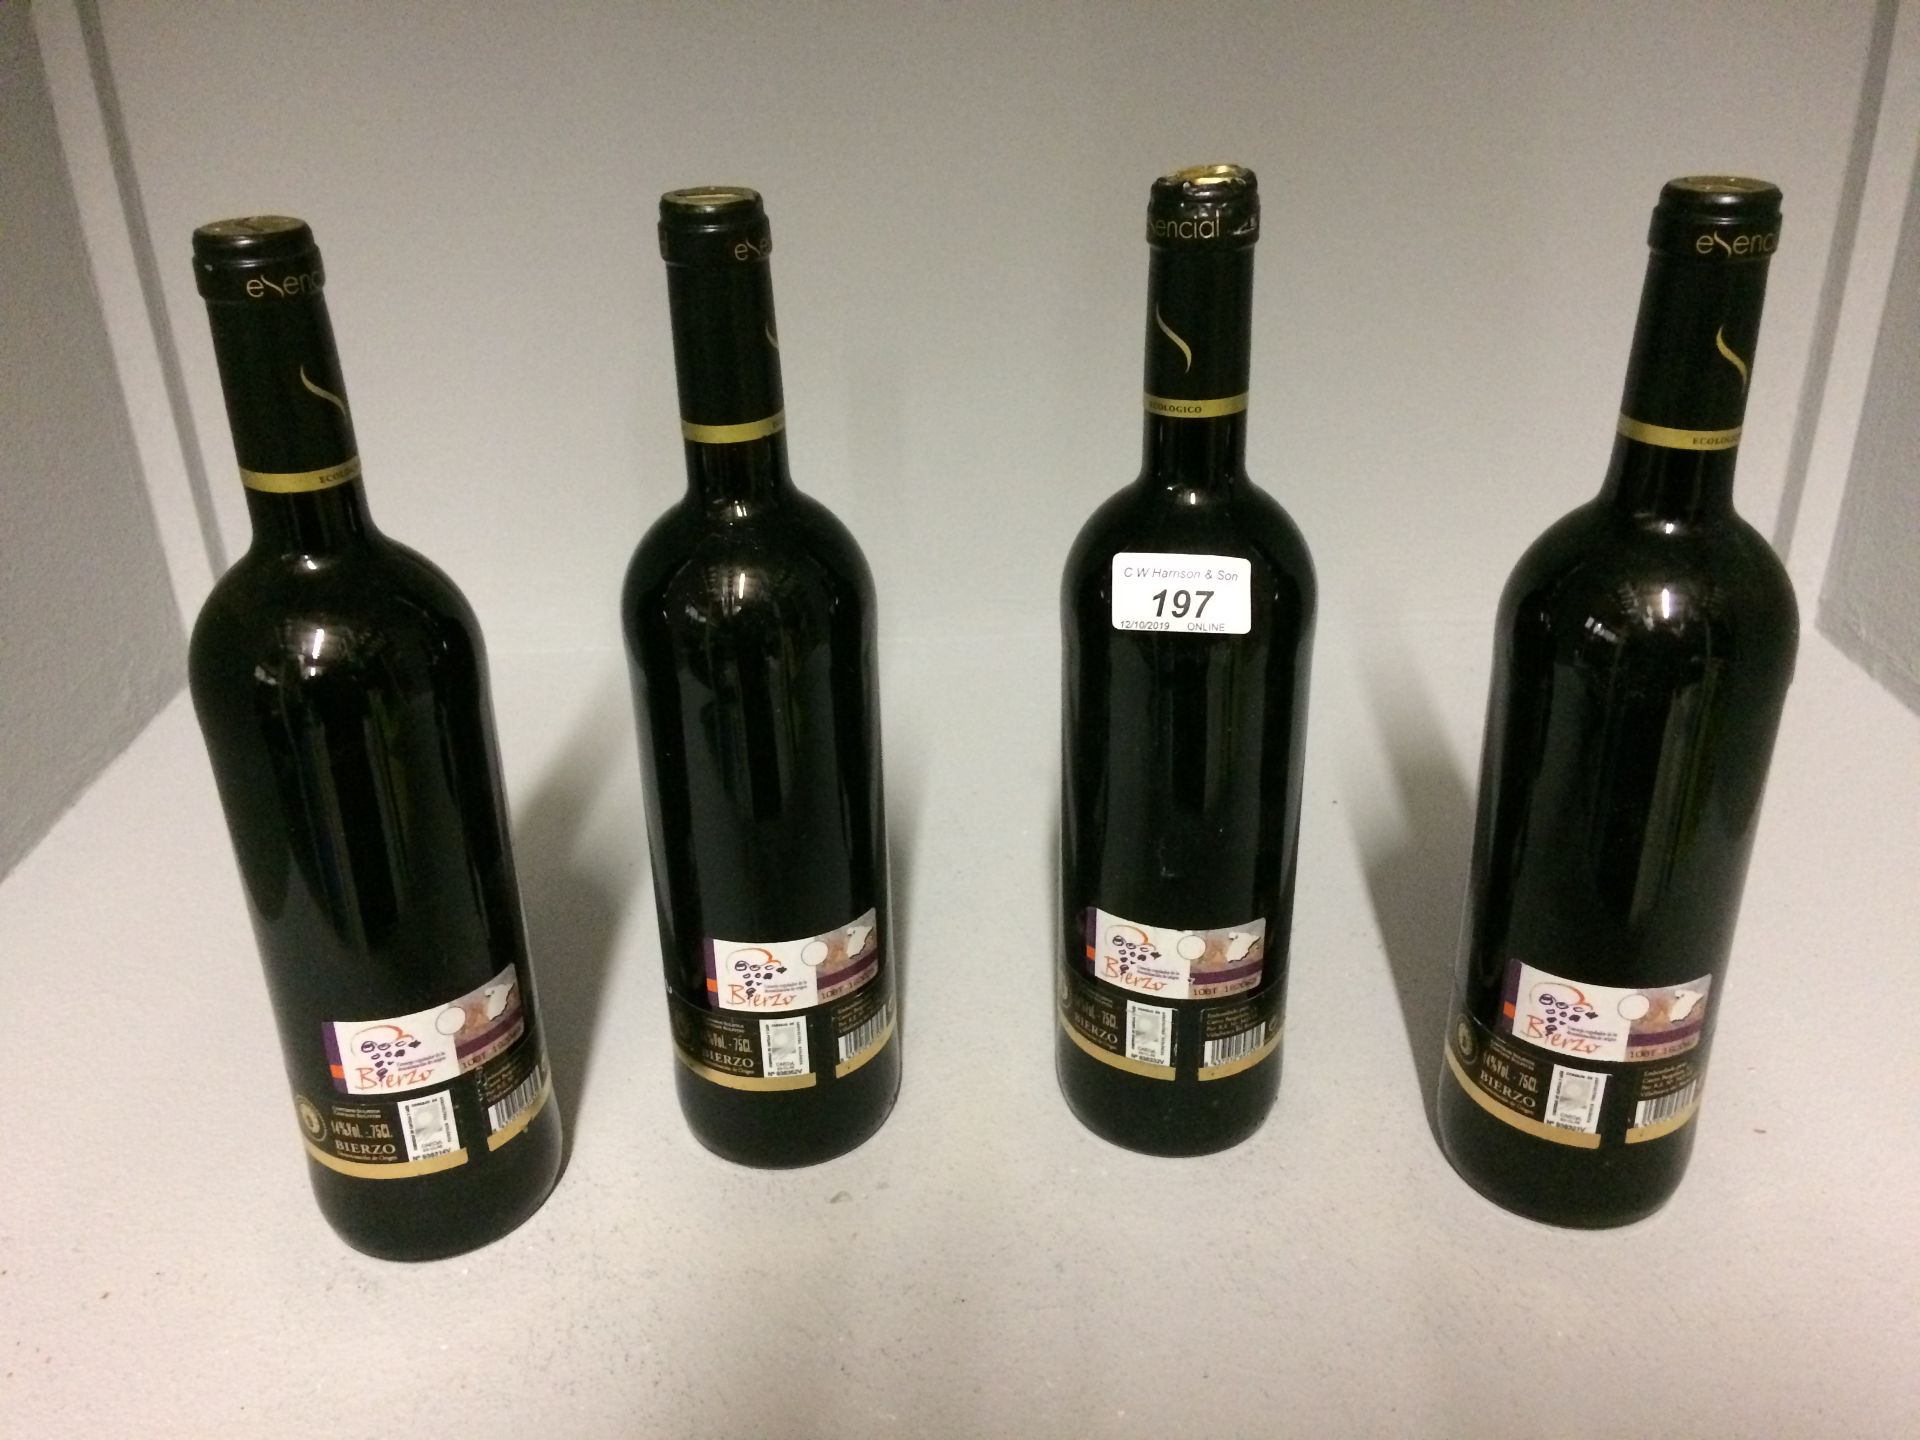 4 x 75cl bottles Bierzo